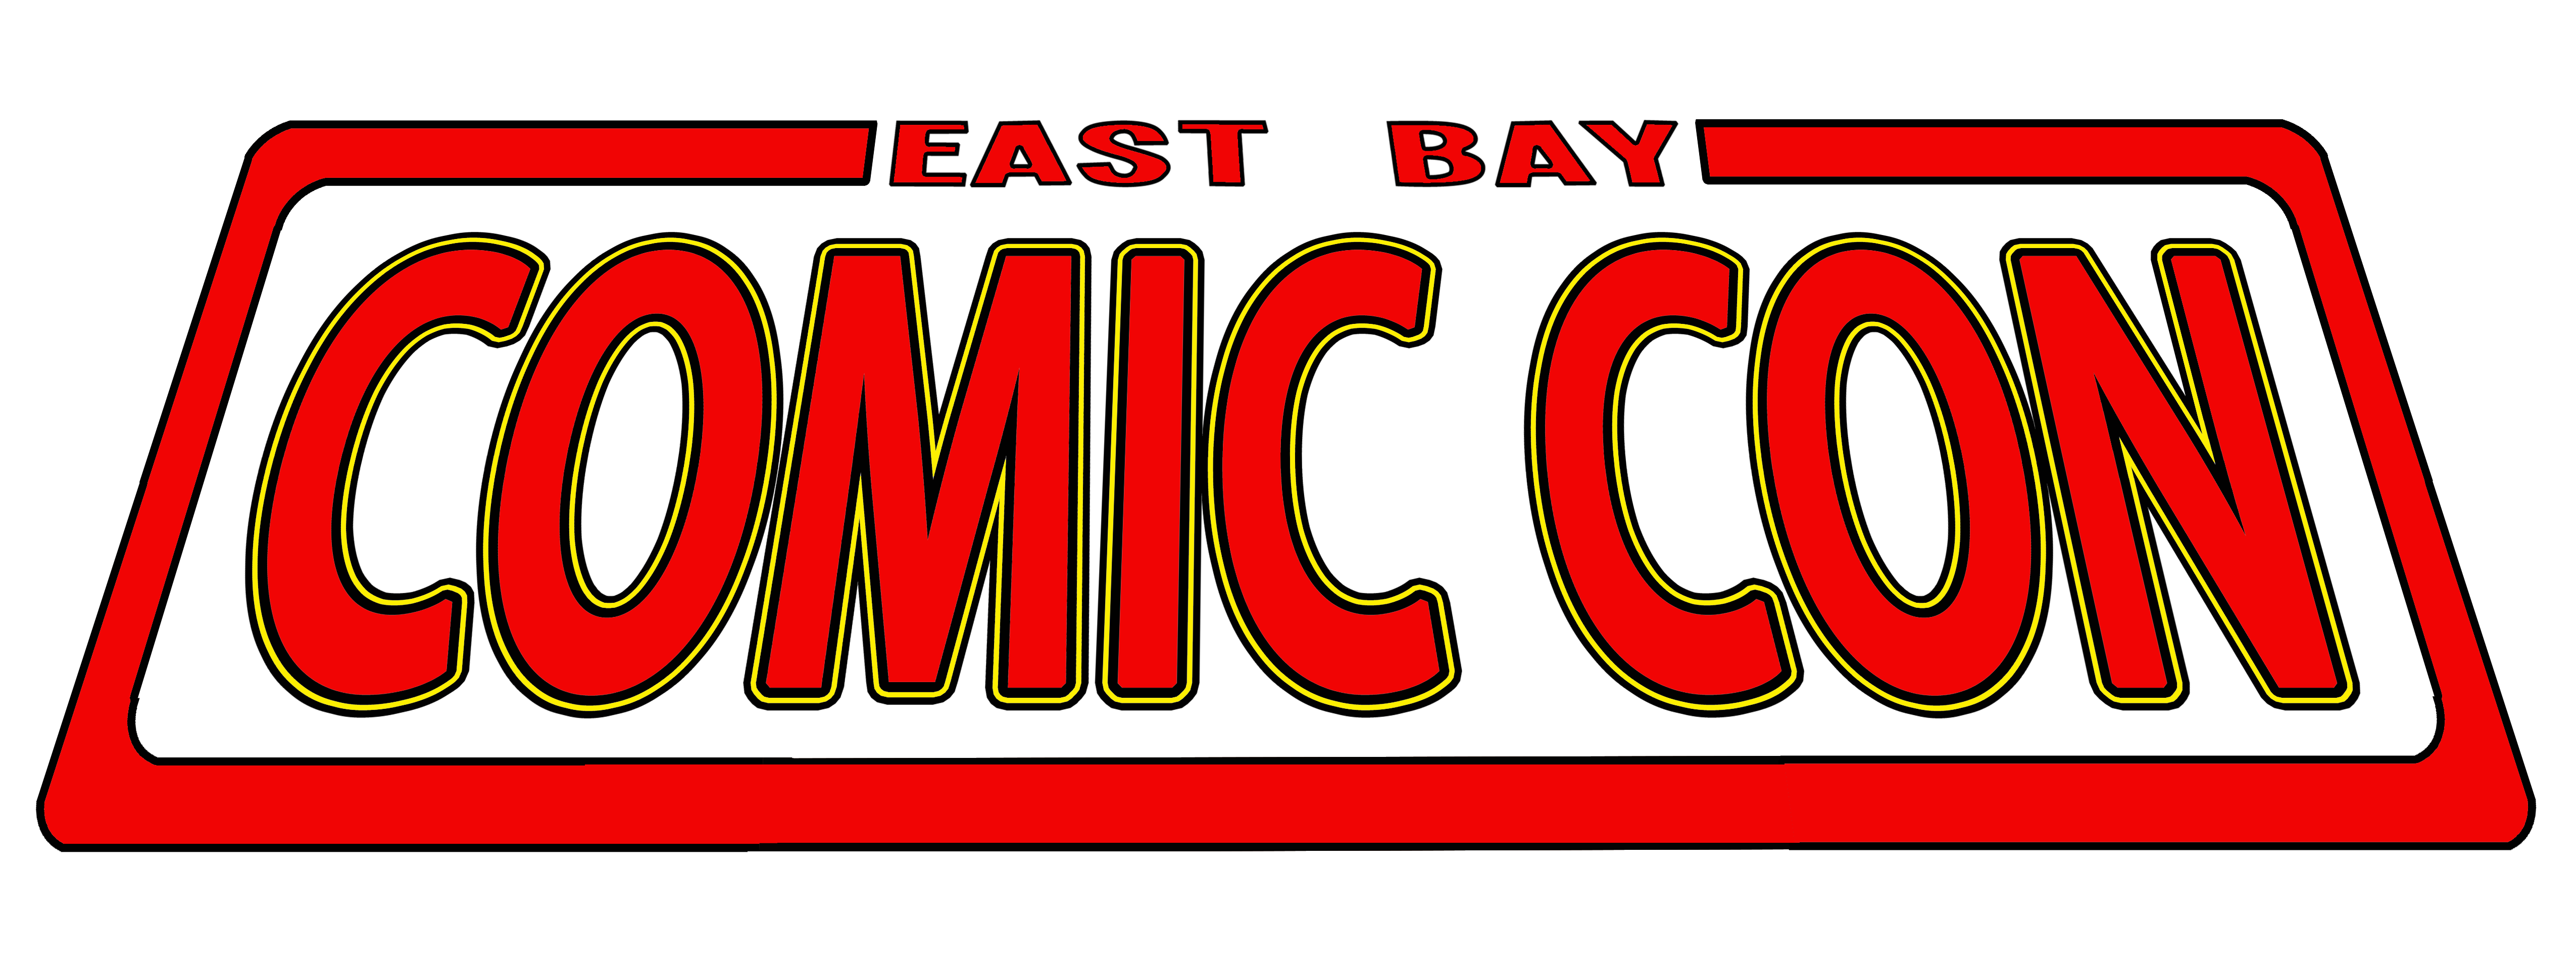 EAST BAY COMIC-CON Comic Book and Fantasy shows